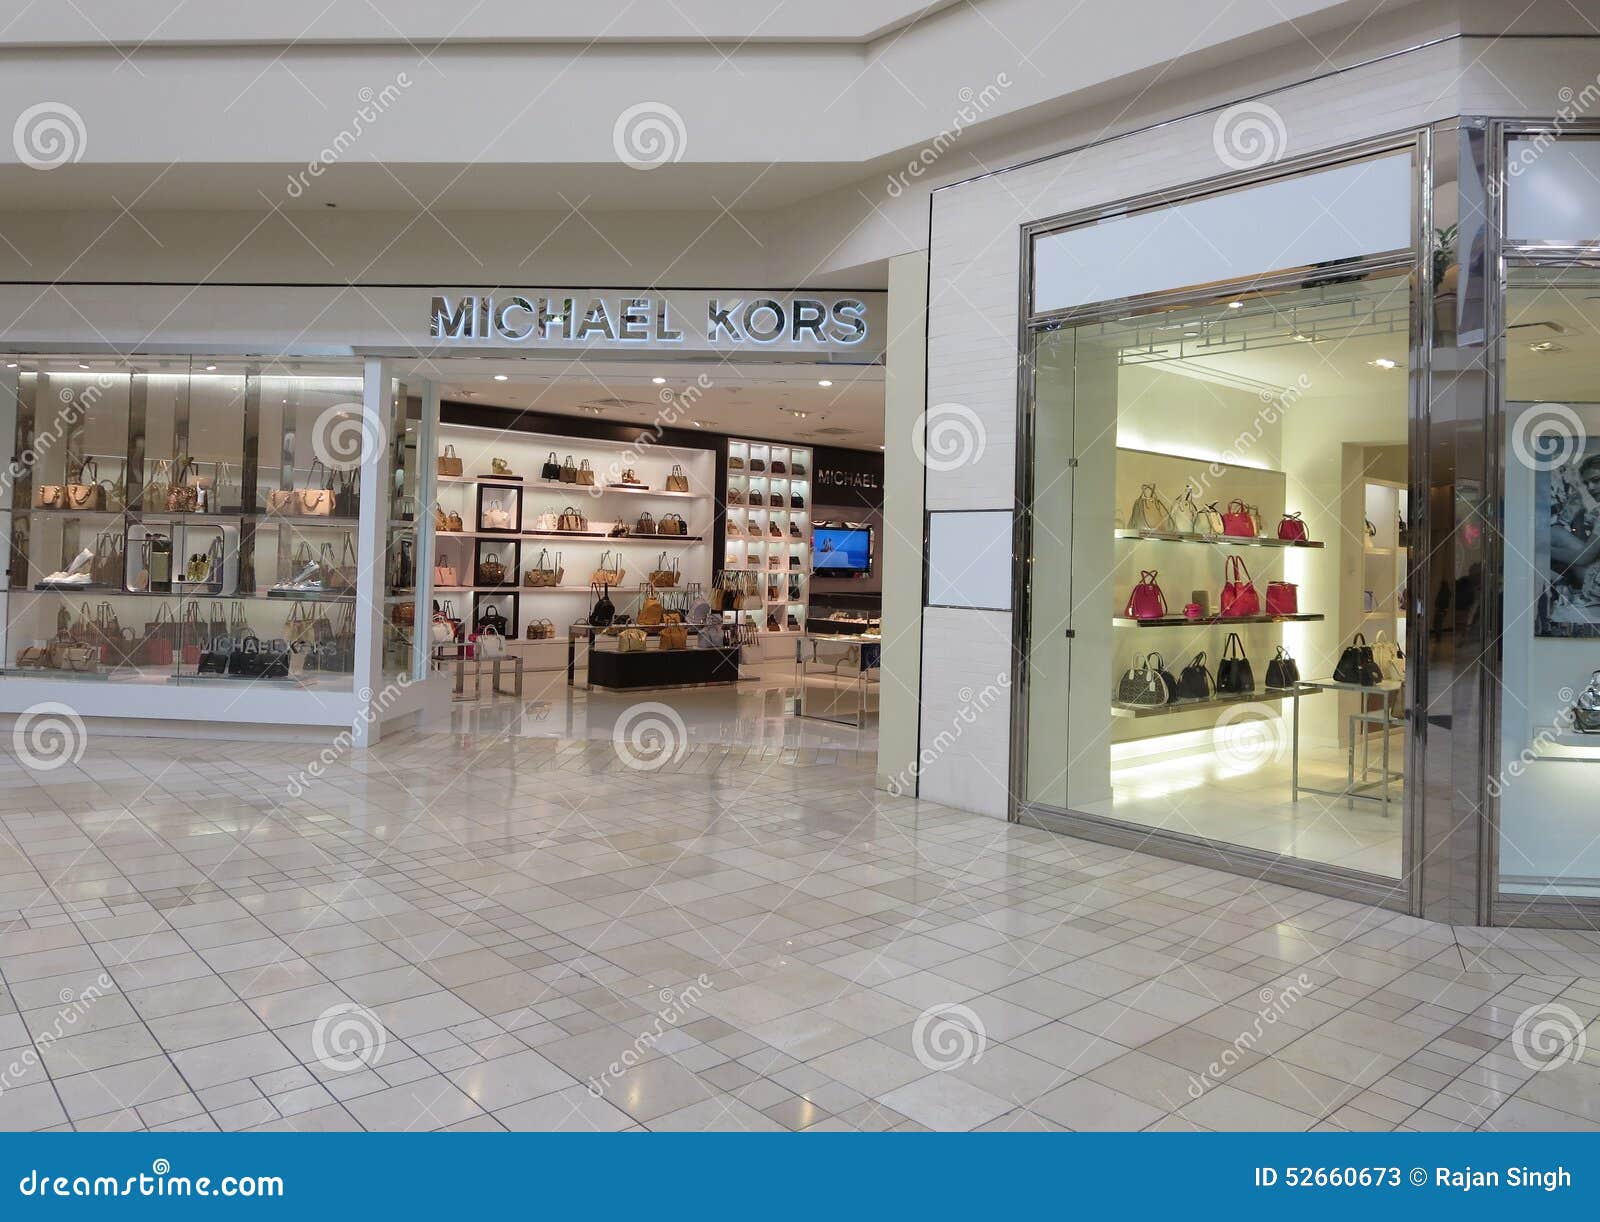 michael kors washington square mall